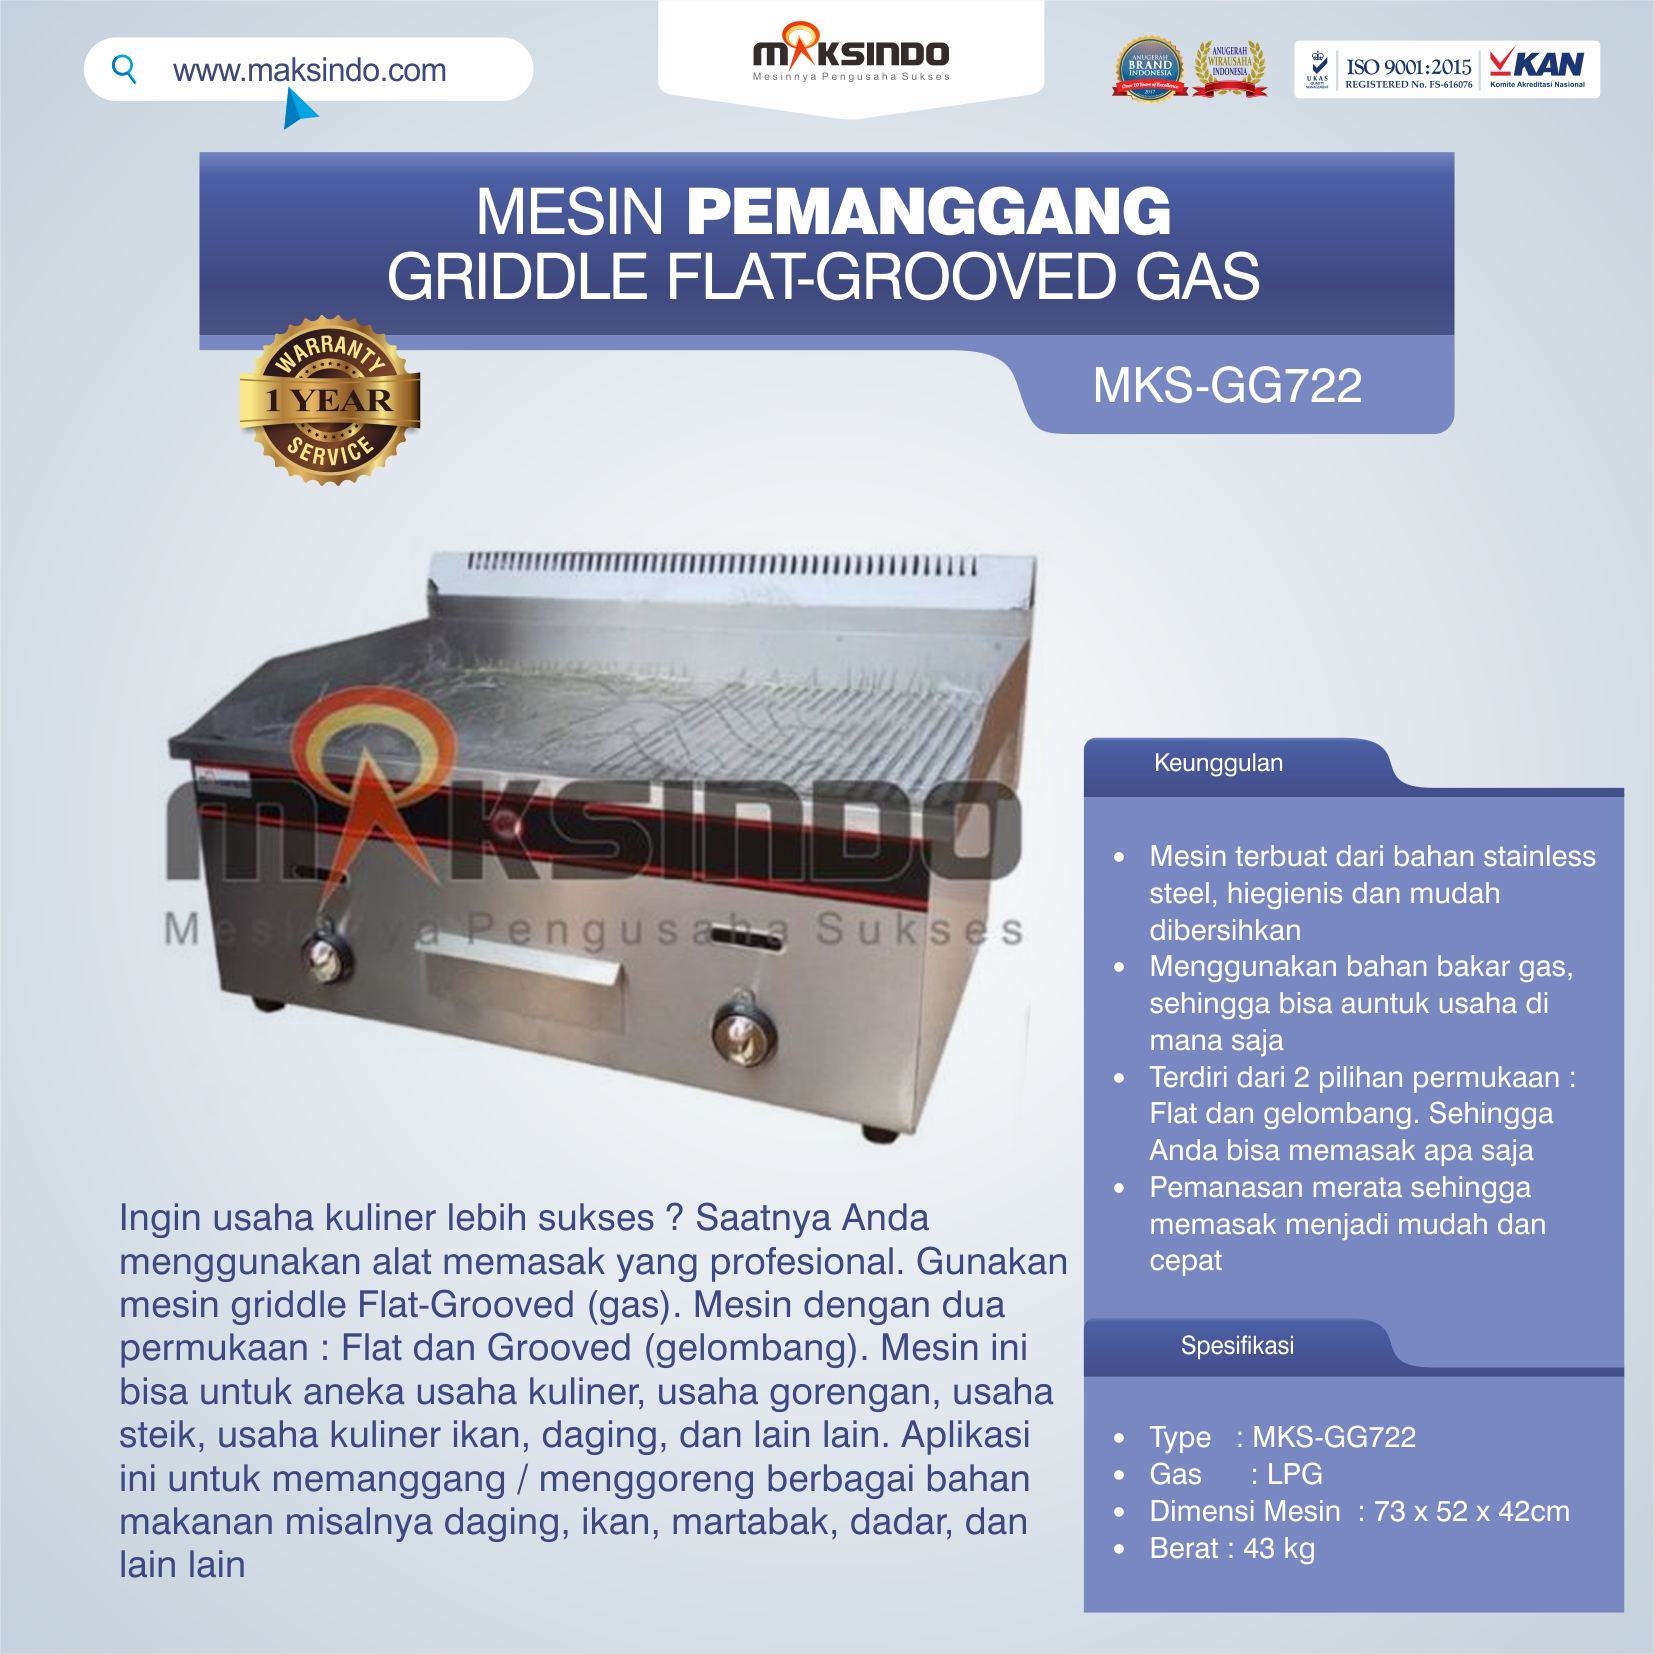 Jual Pemanggang Griddle Flat-Grooved Gas (GG722) di Semarang